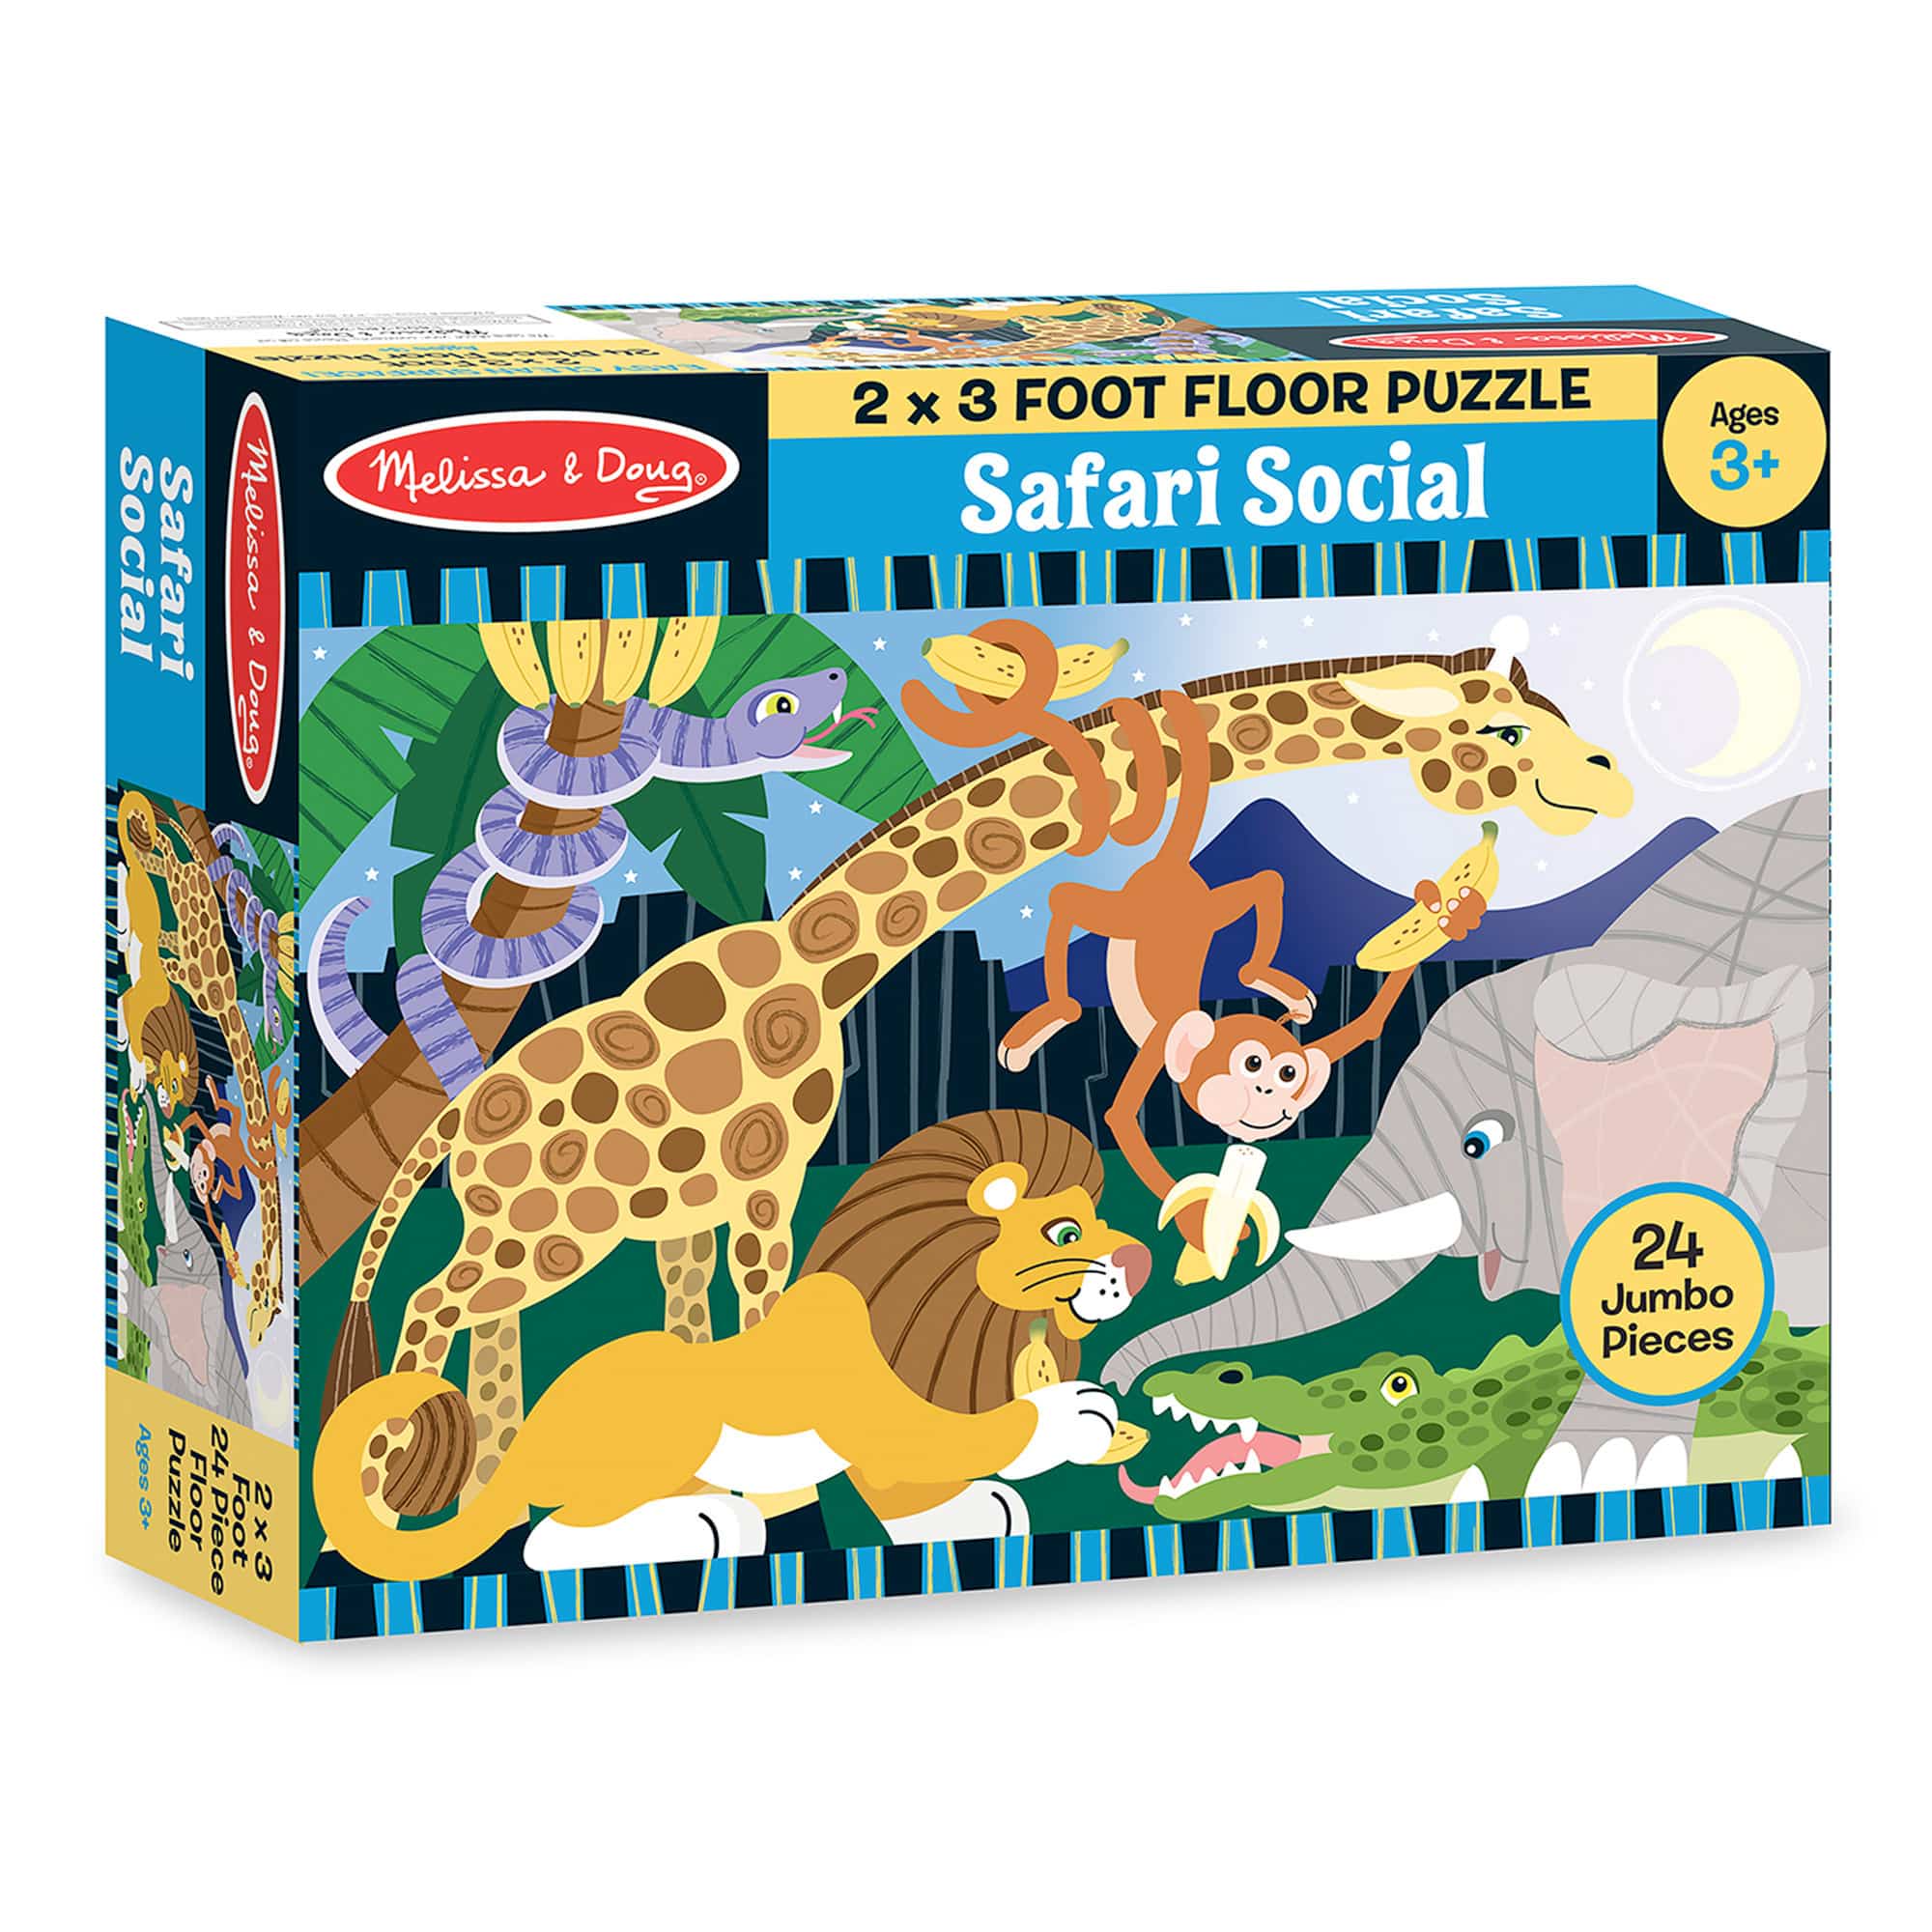 Melissa and Doug - 24 Piece Giant Floor Puzzle - Safari Social